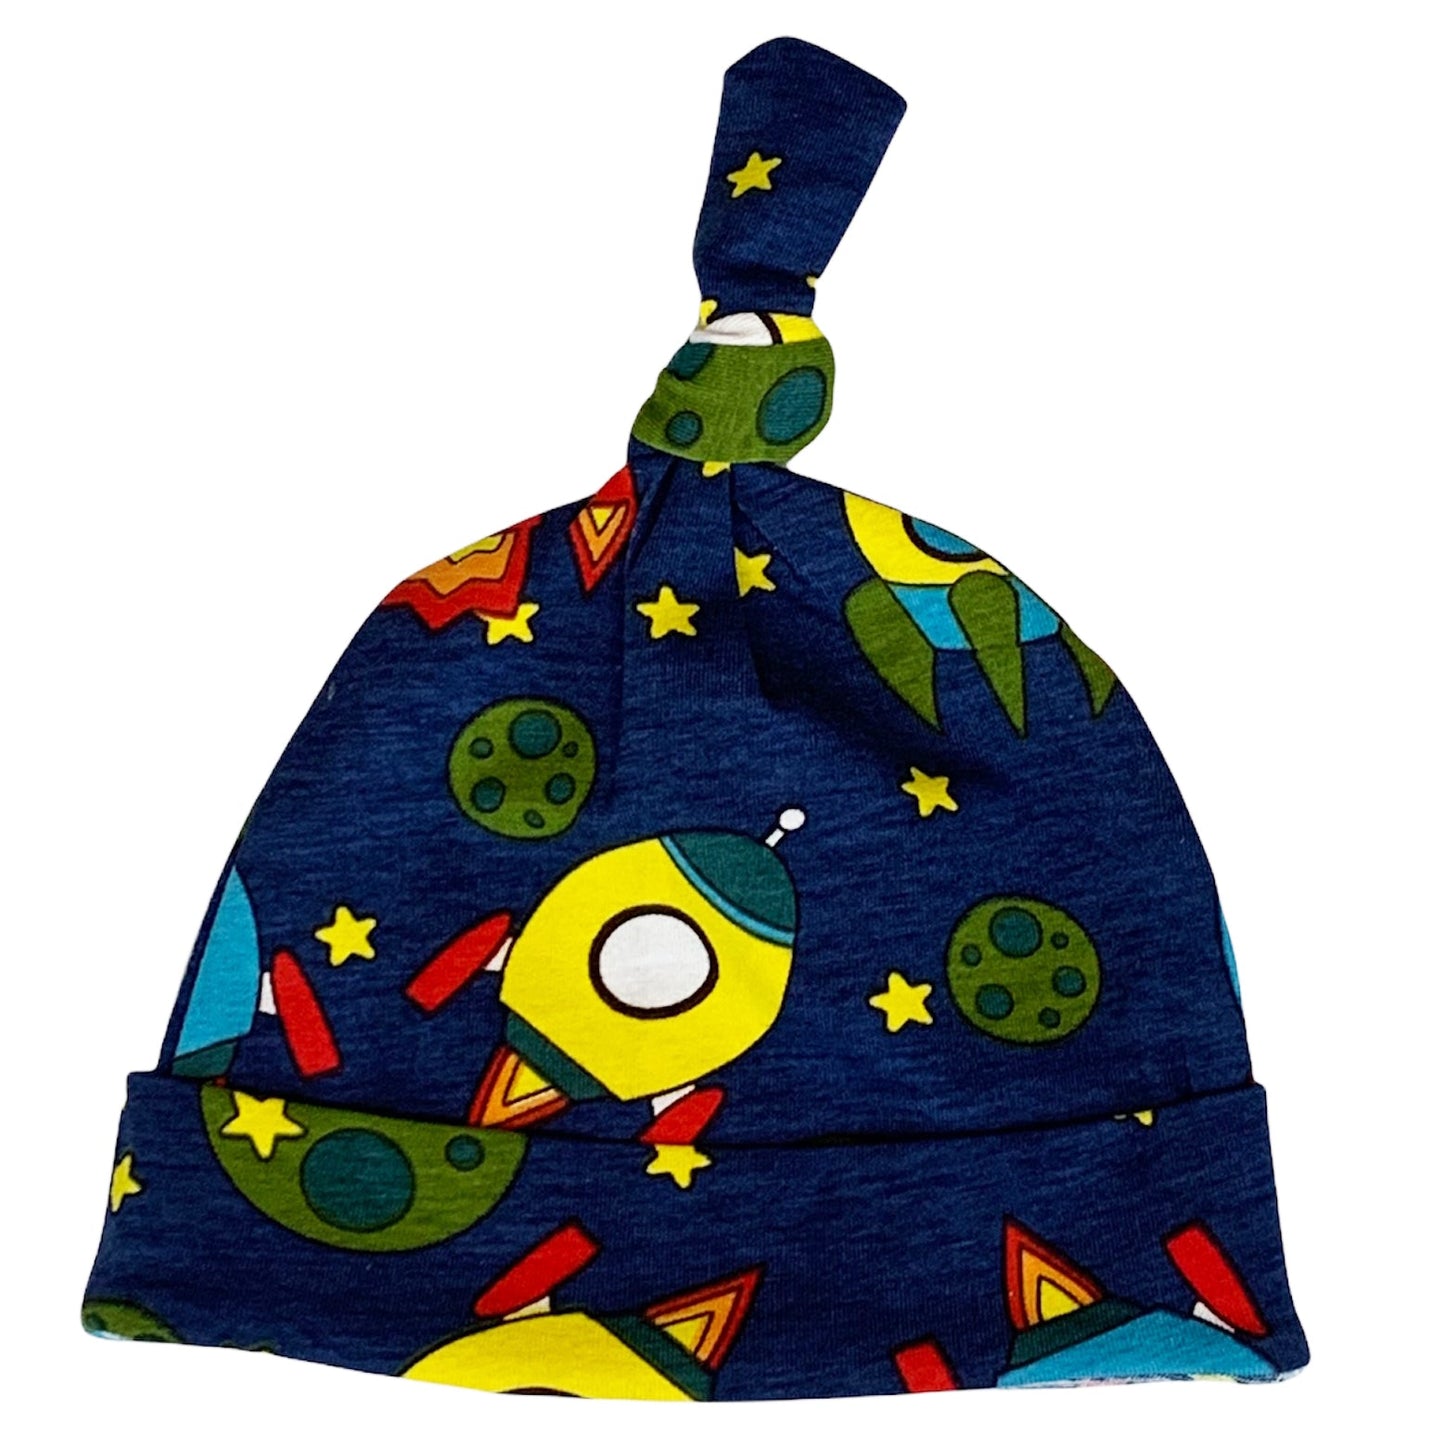 AnnLoren Baby Boys Layette Space Ship Onesie Pants Cap 3pc Gift Set Clothing